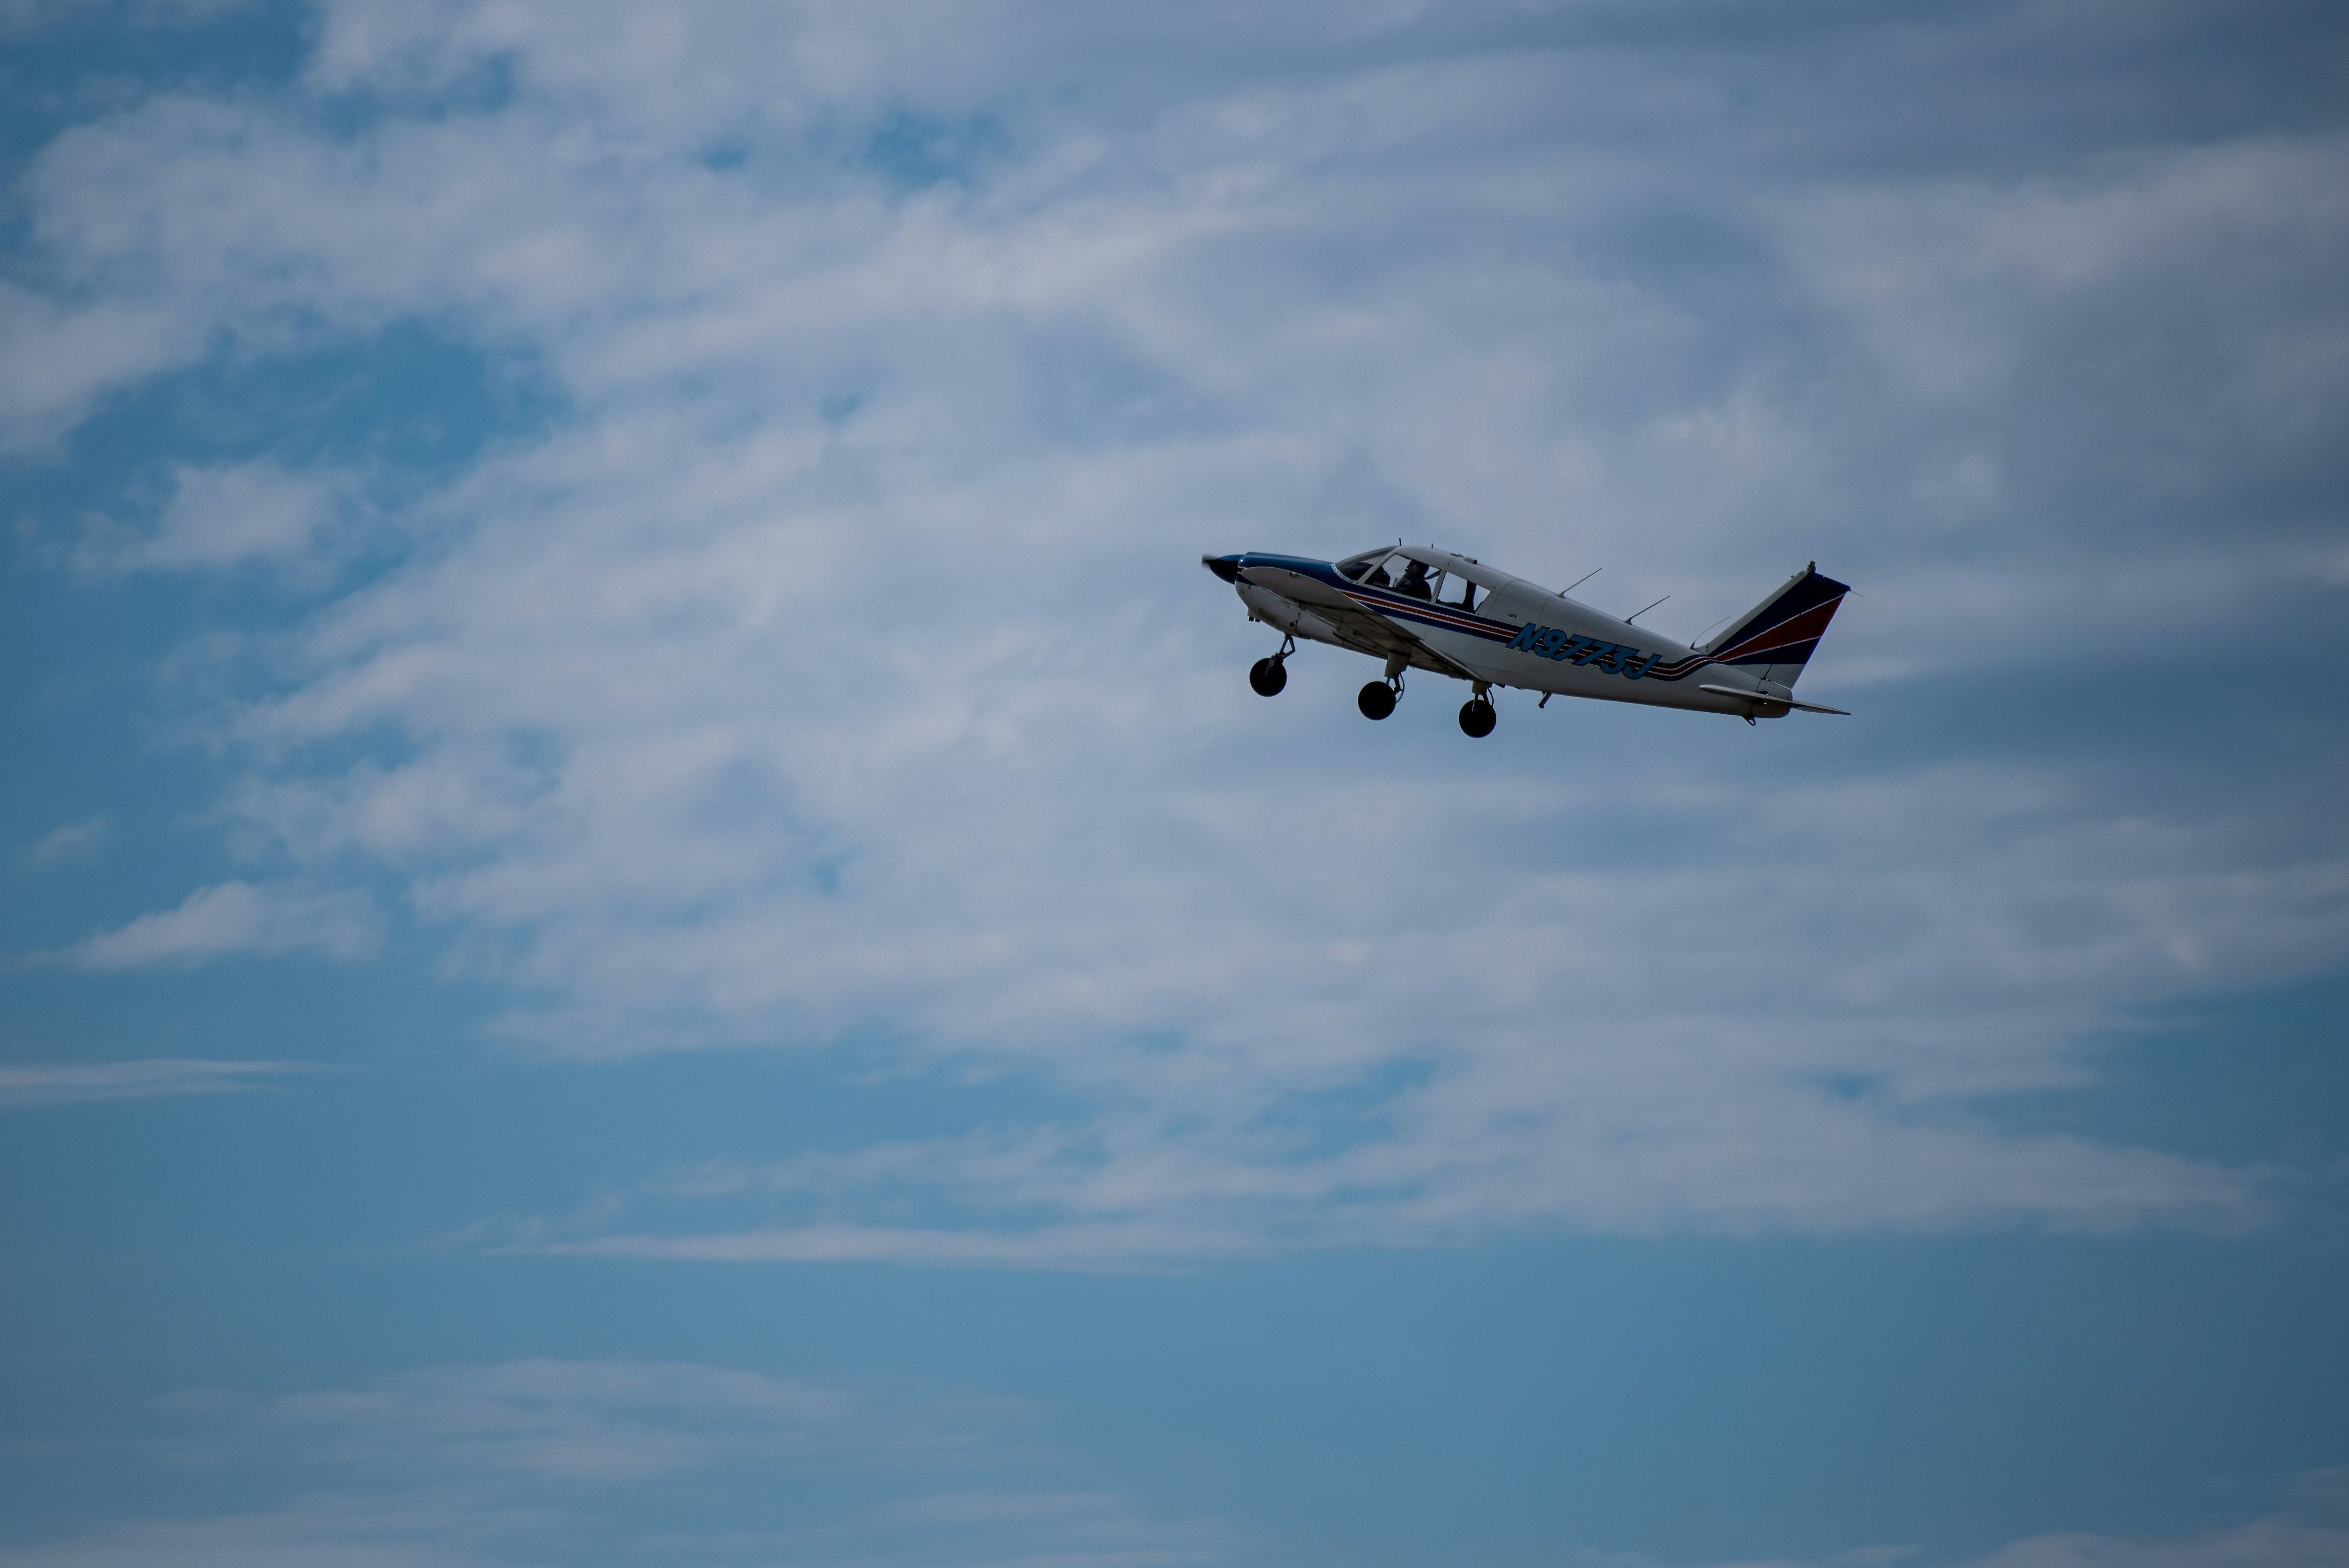 white passenger plane in mid air under blue sky during daytime